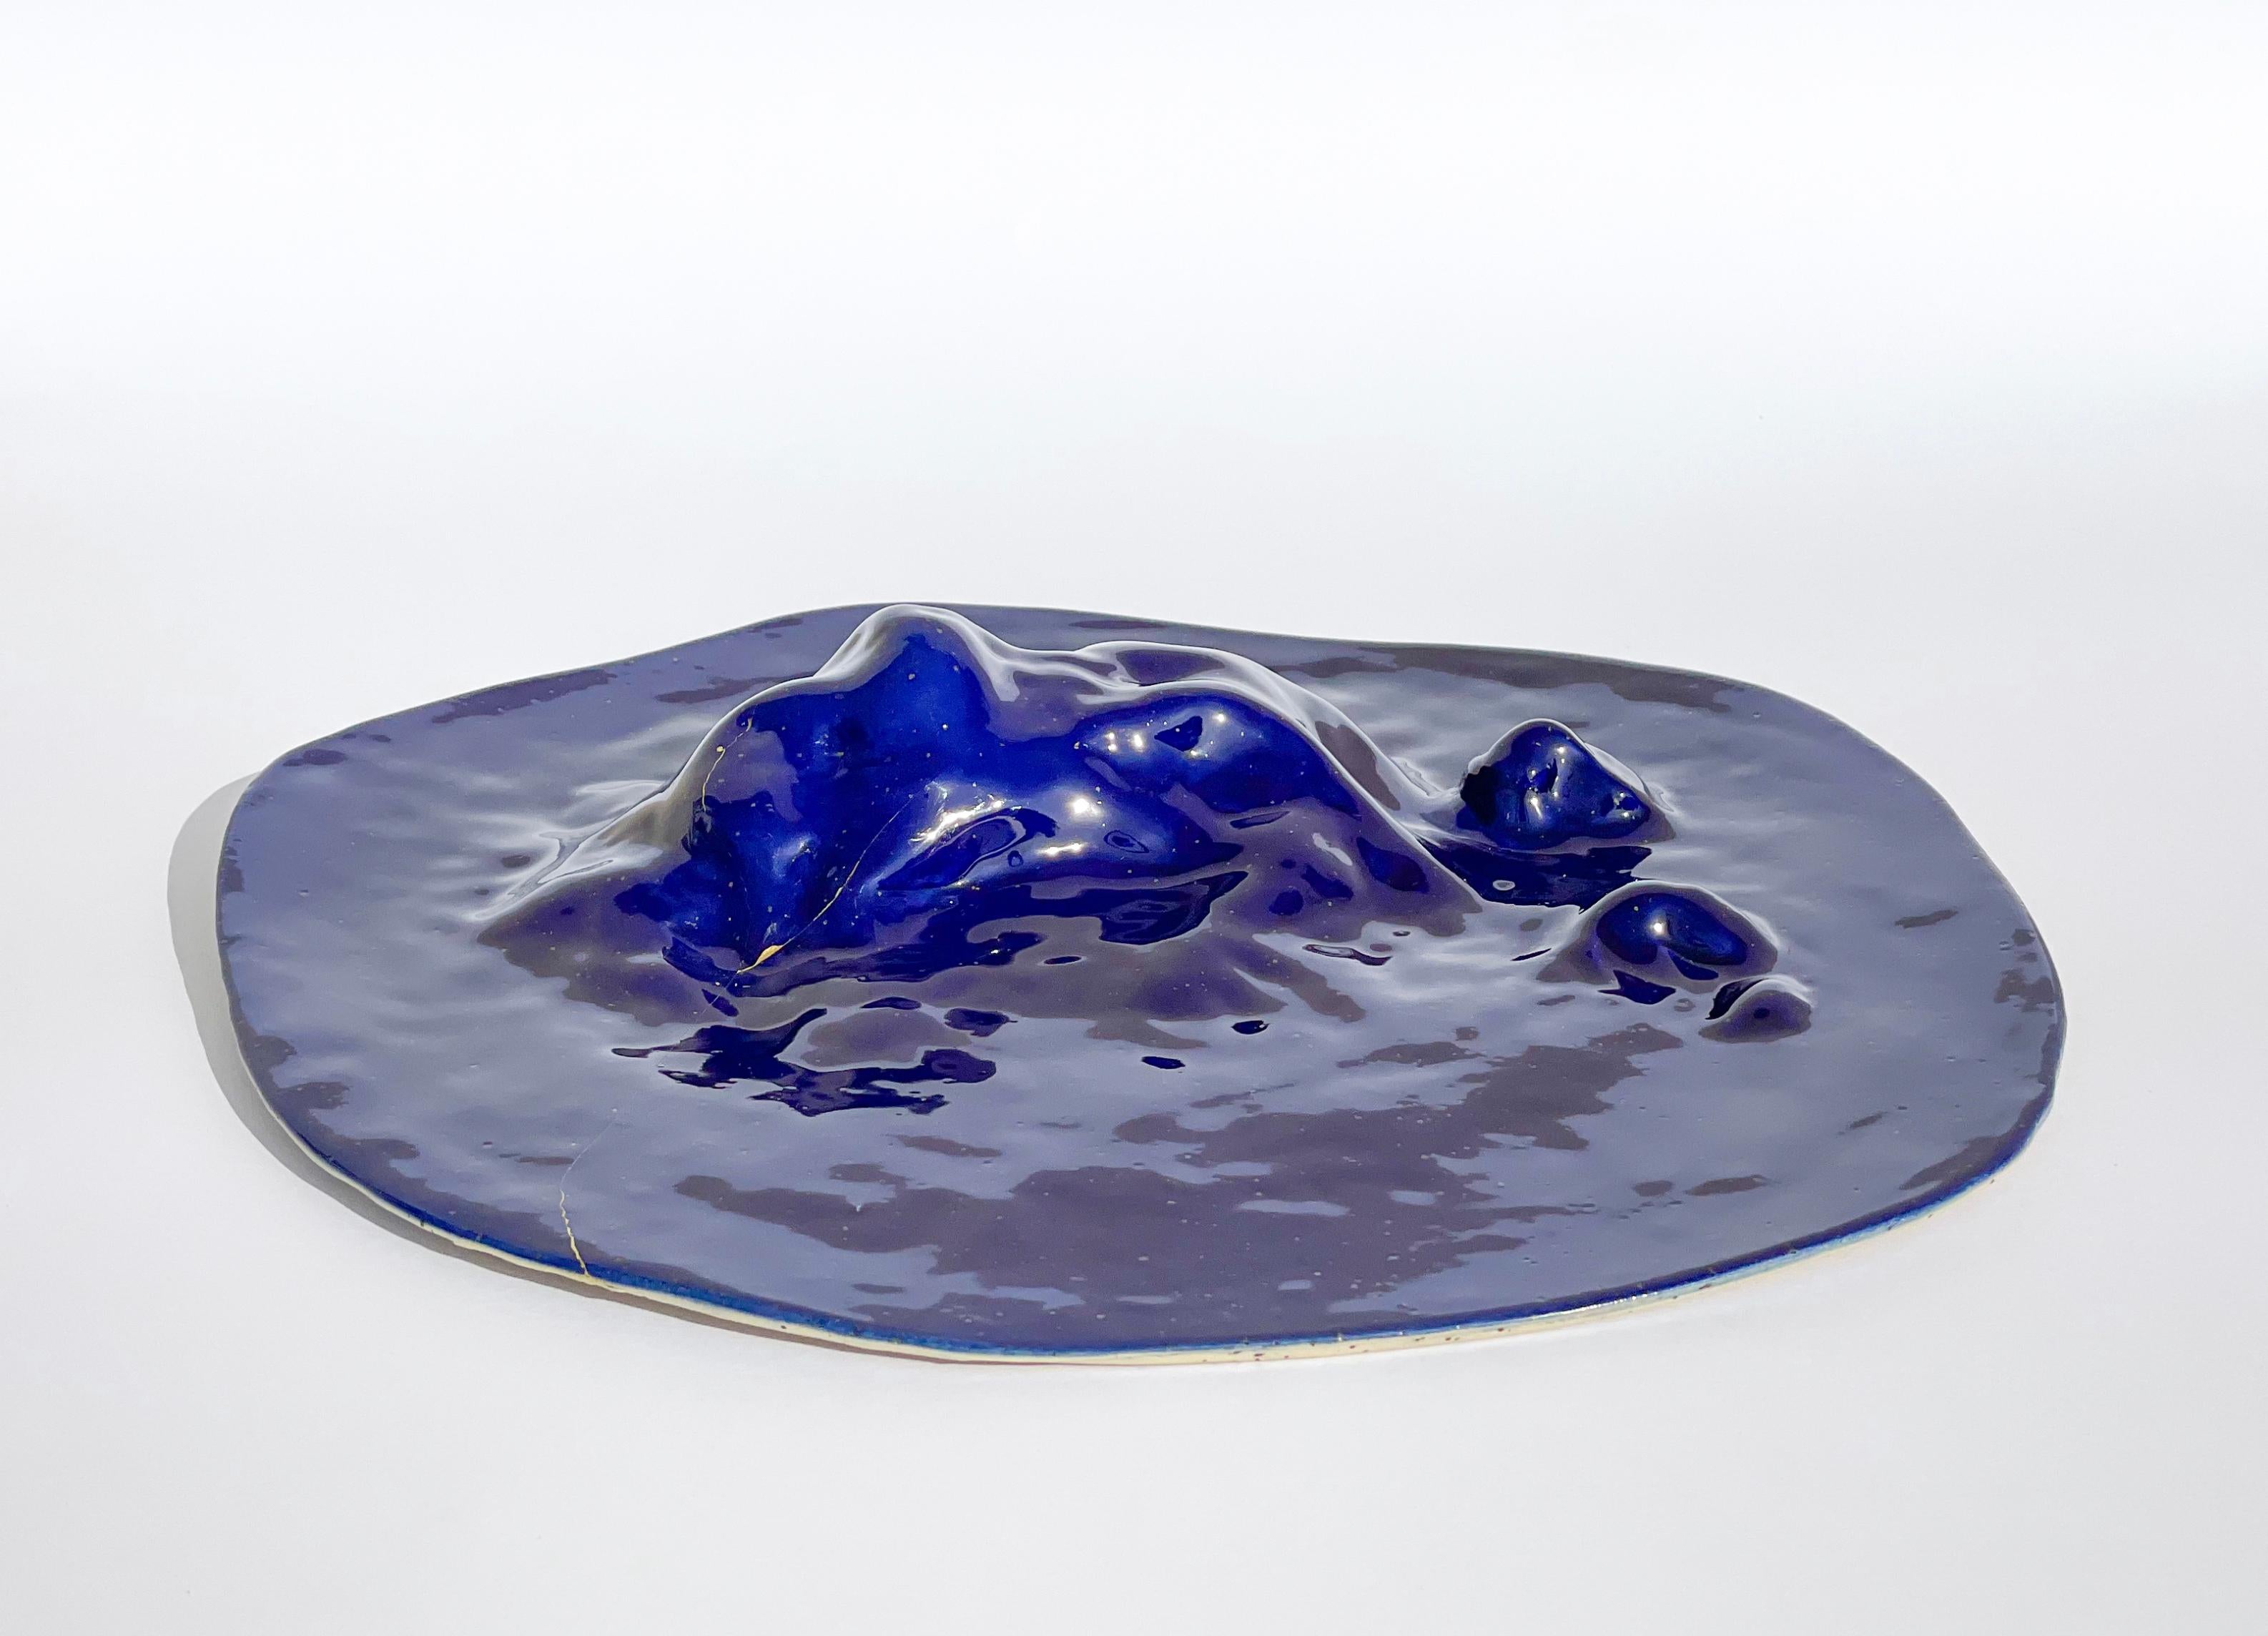 Unique Sculptural 'Gongshi' Plates N0.15 Objet D'art Cobalt Blue In New Condition For Sale In London, GB